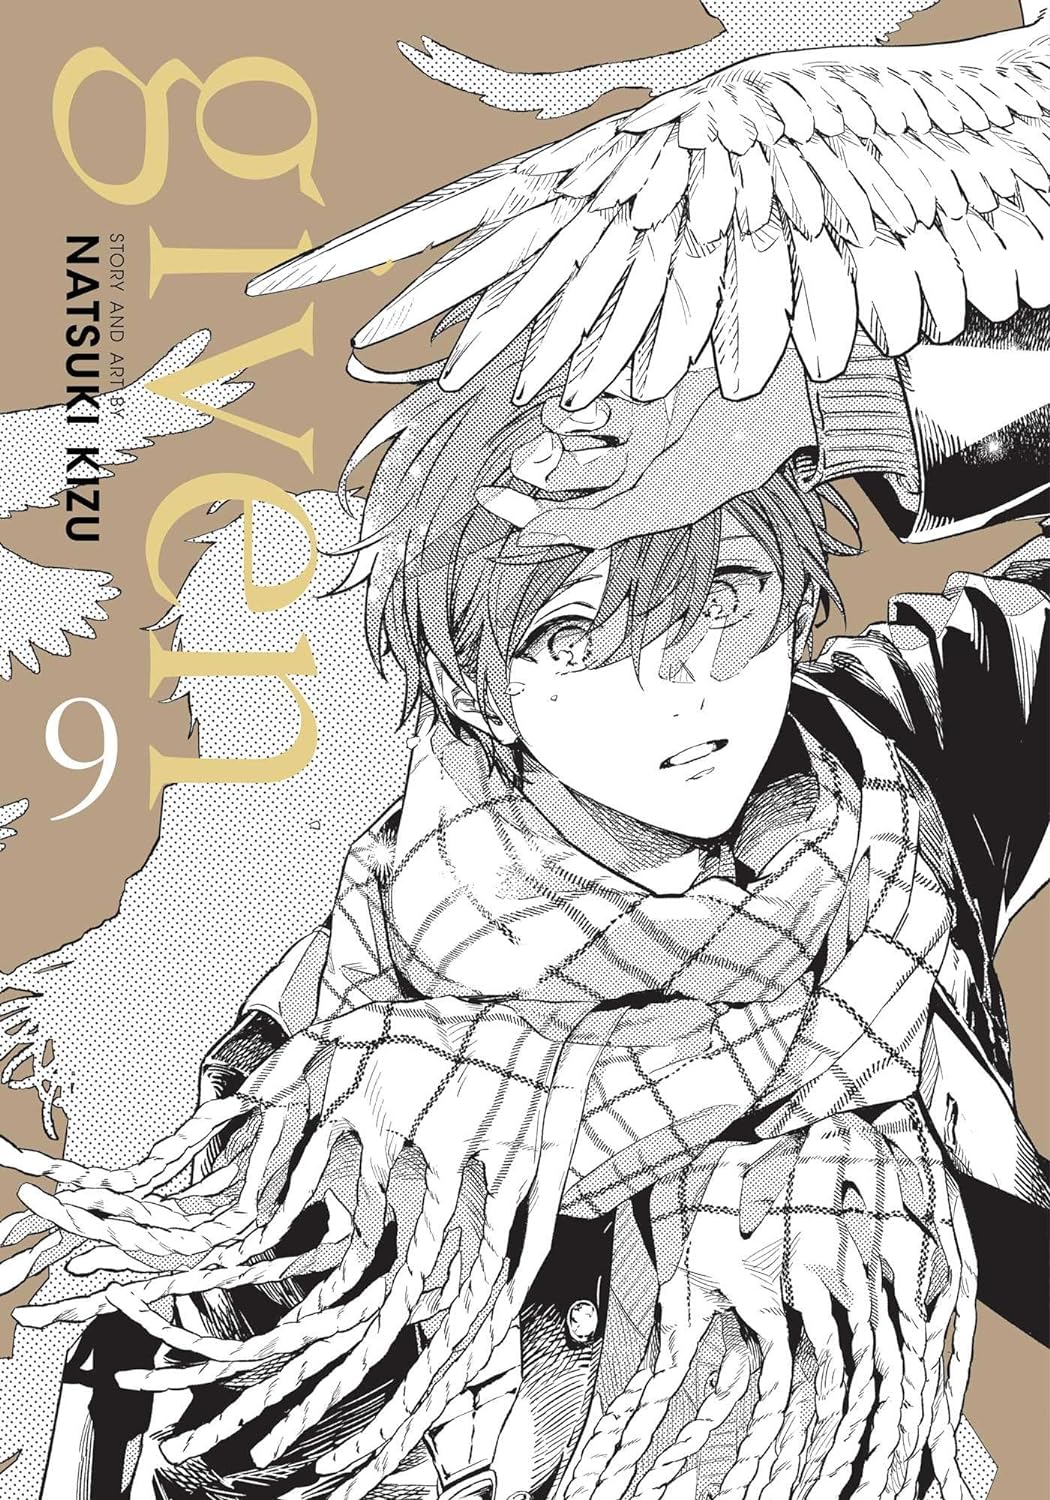 Given (Manga) Vol. 09